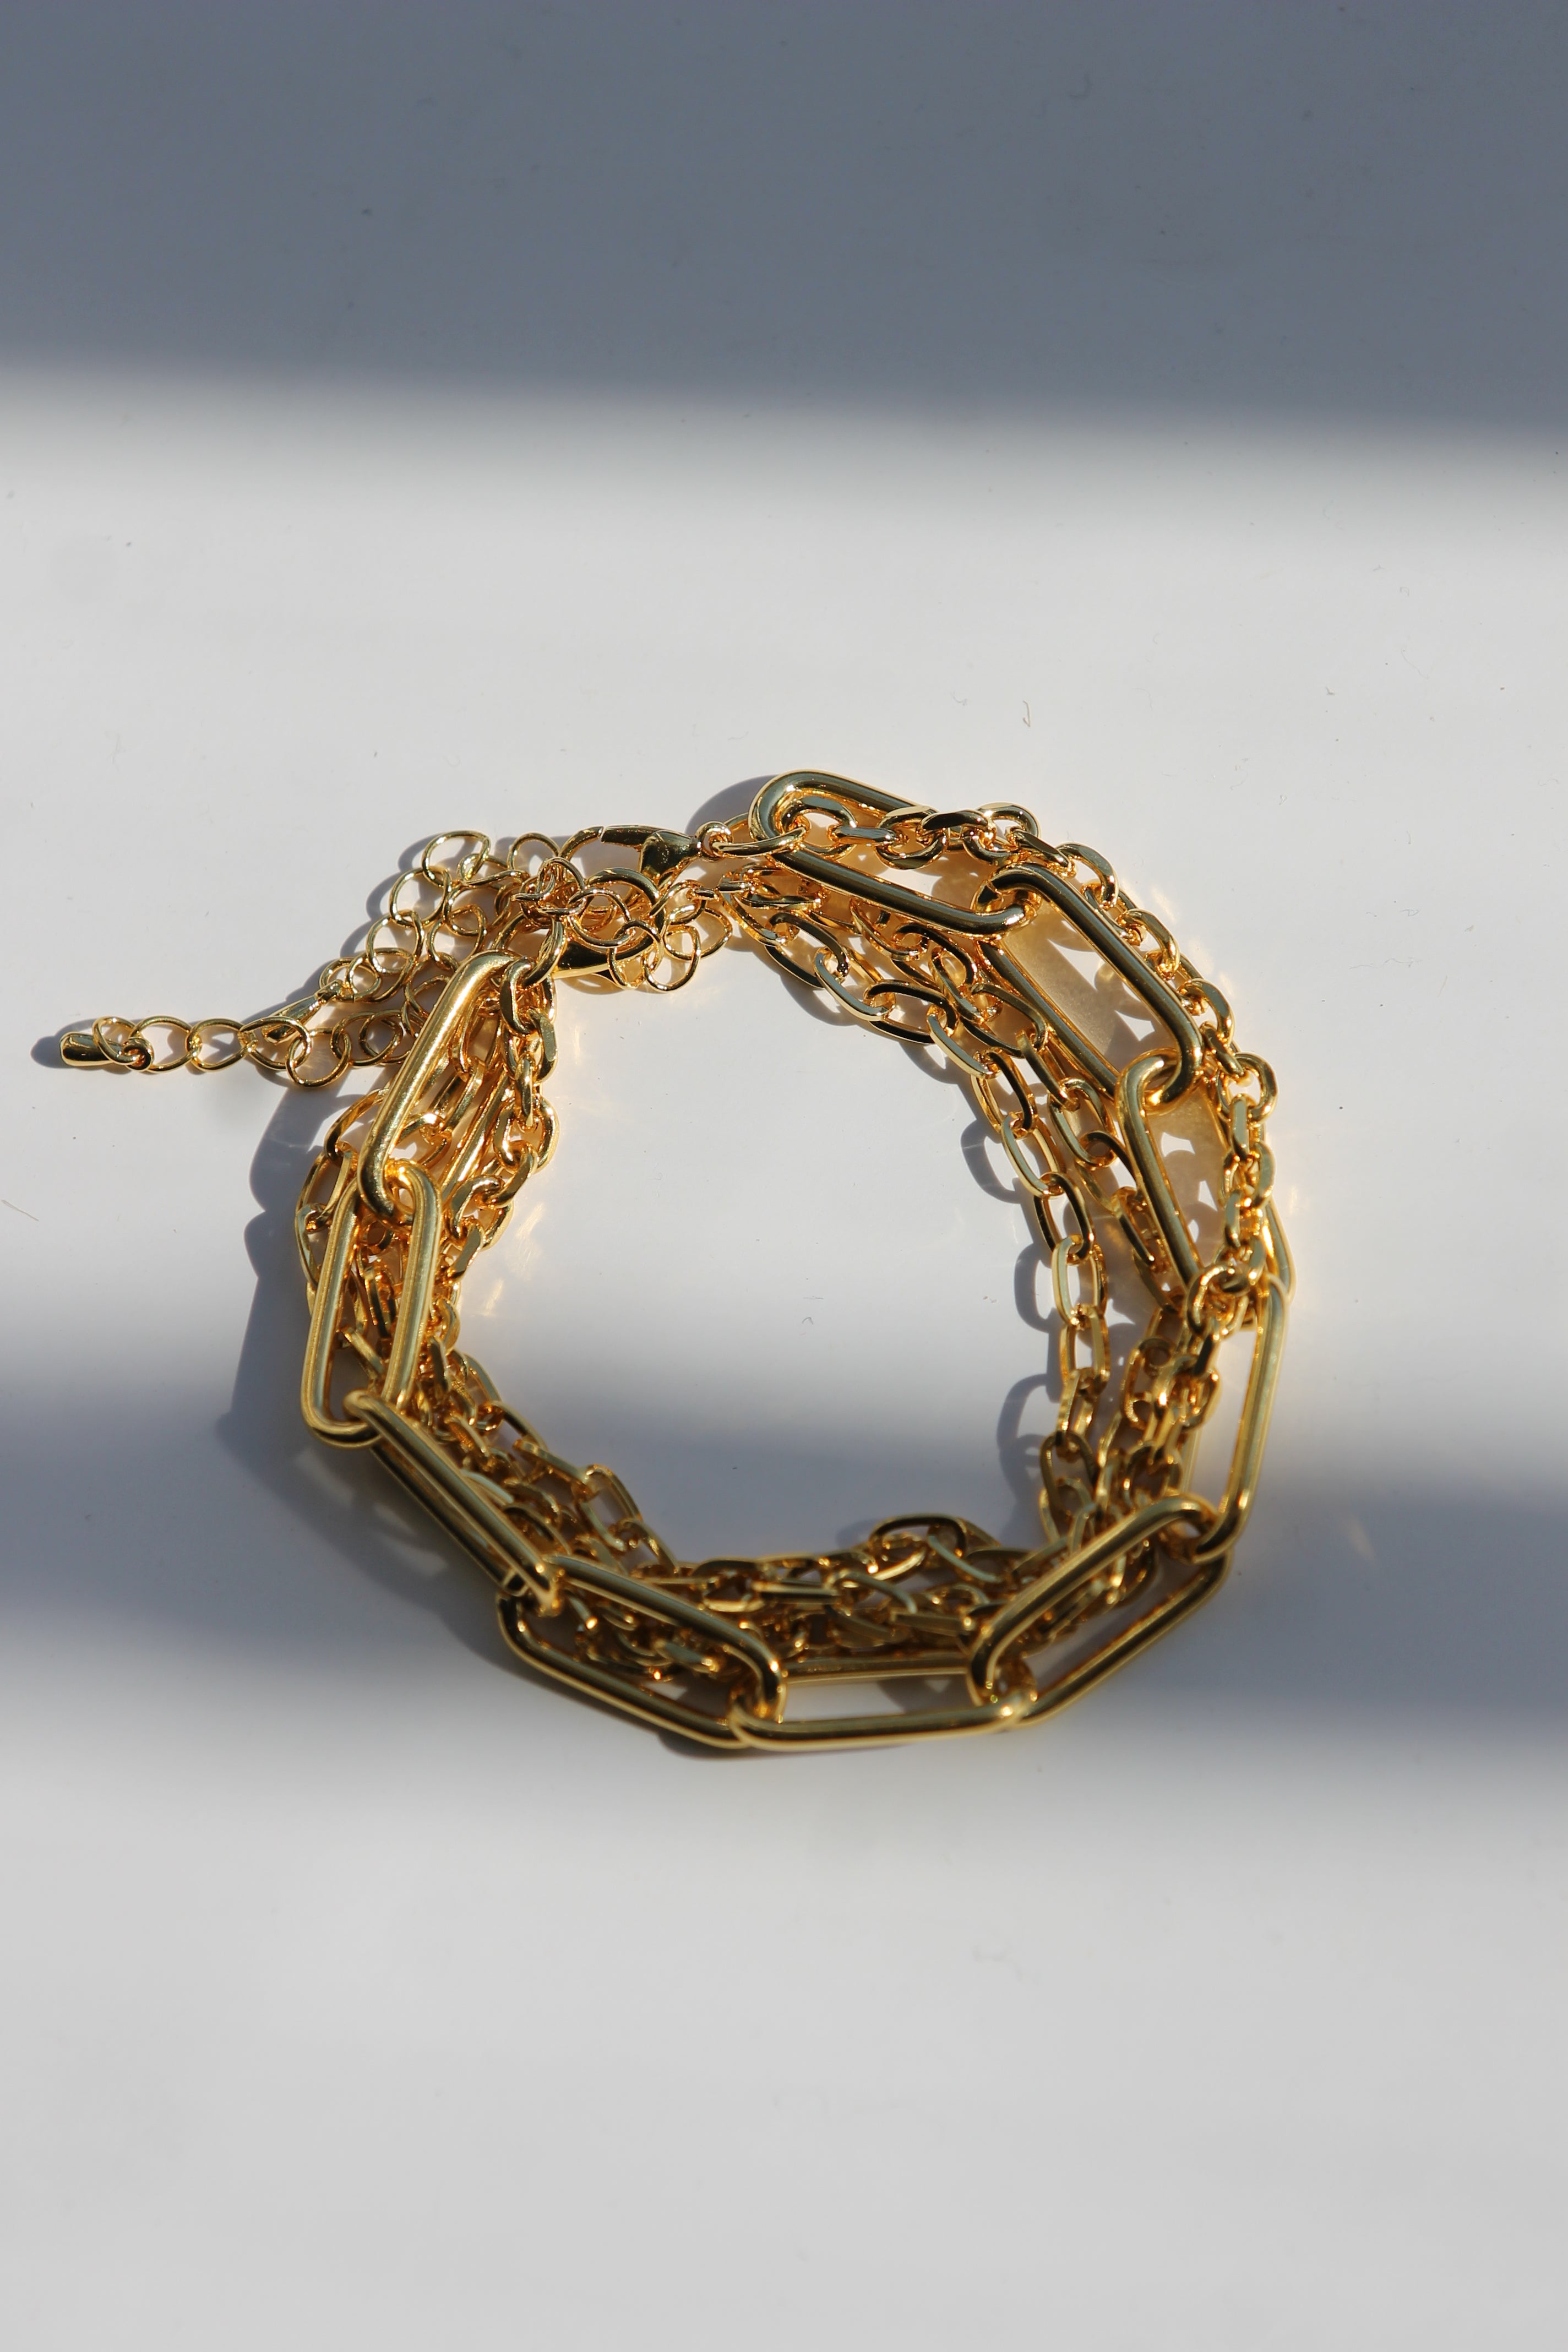 Multi Gold Chain Bracelet